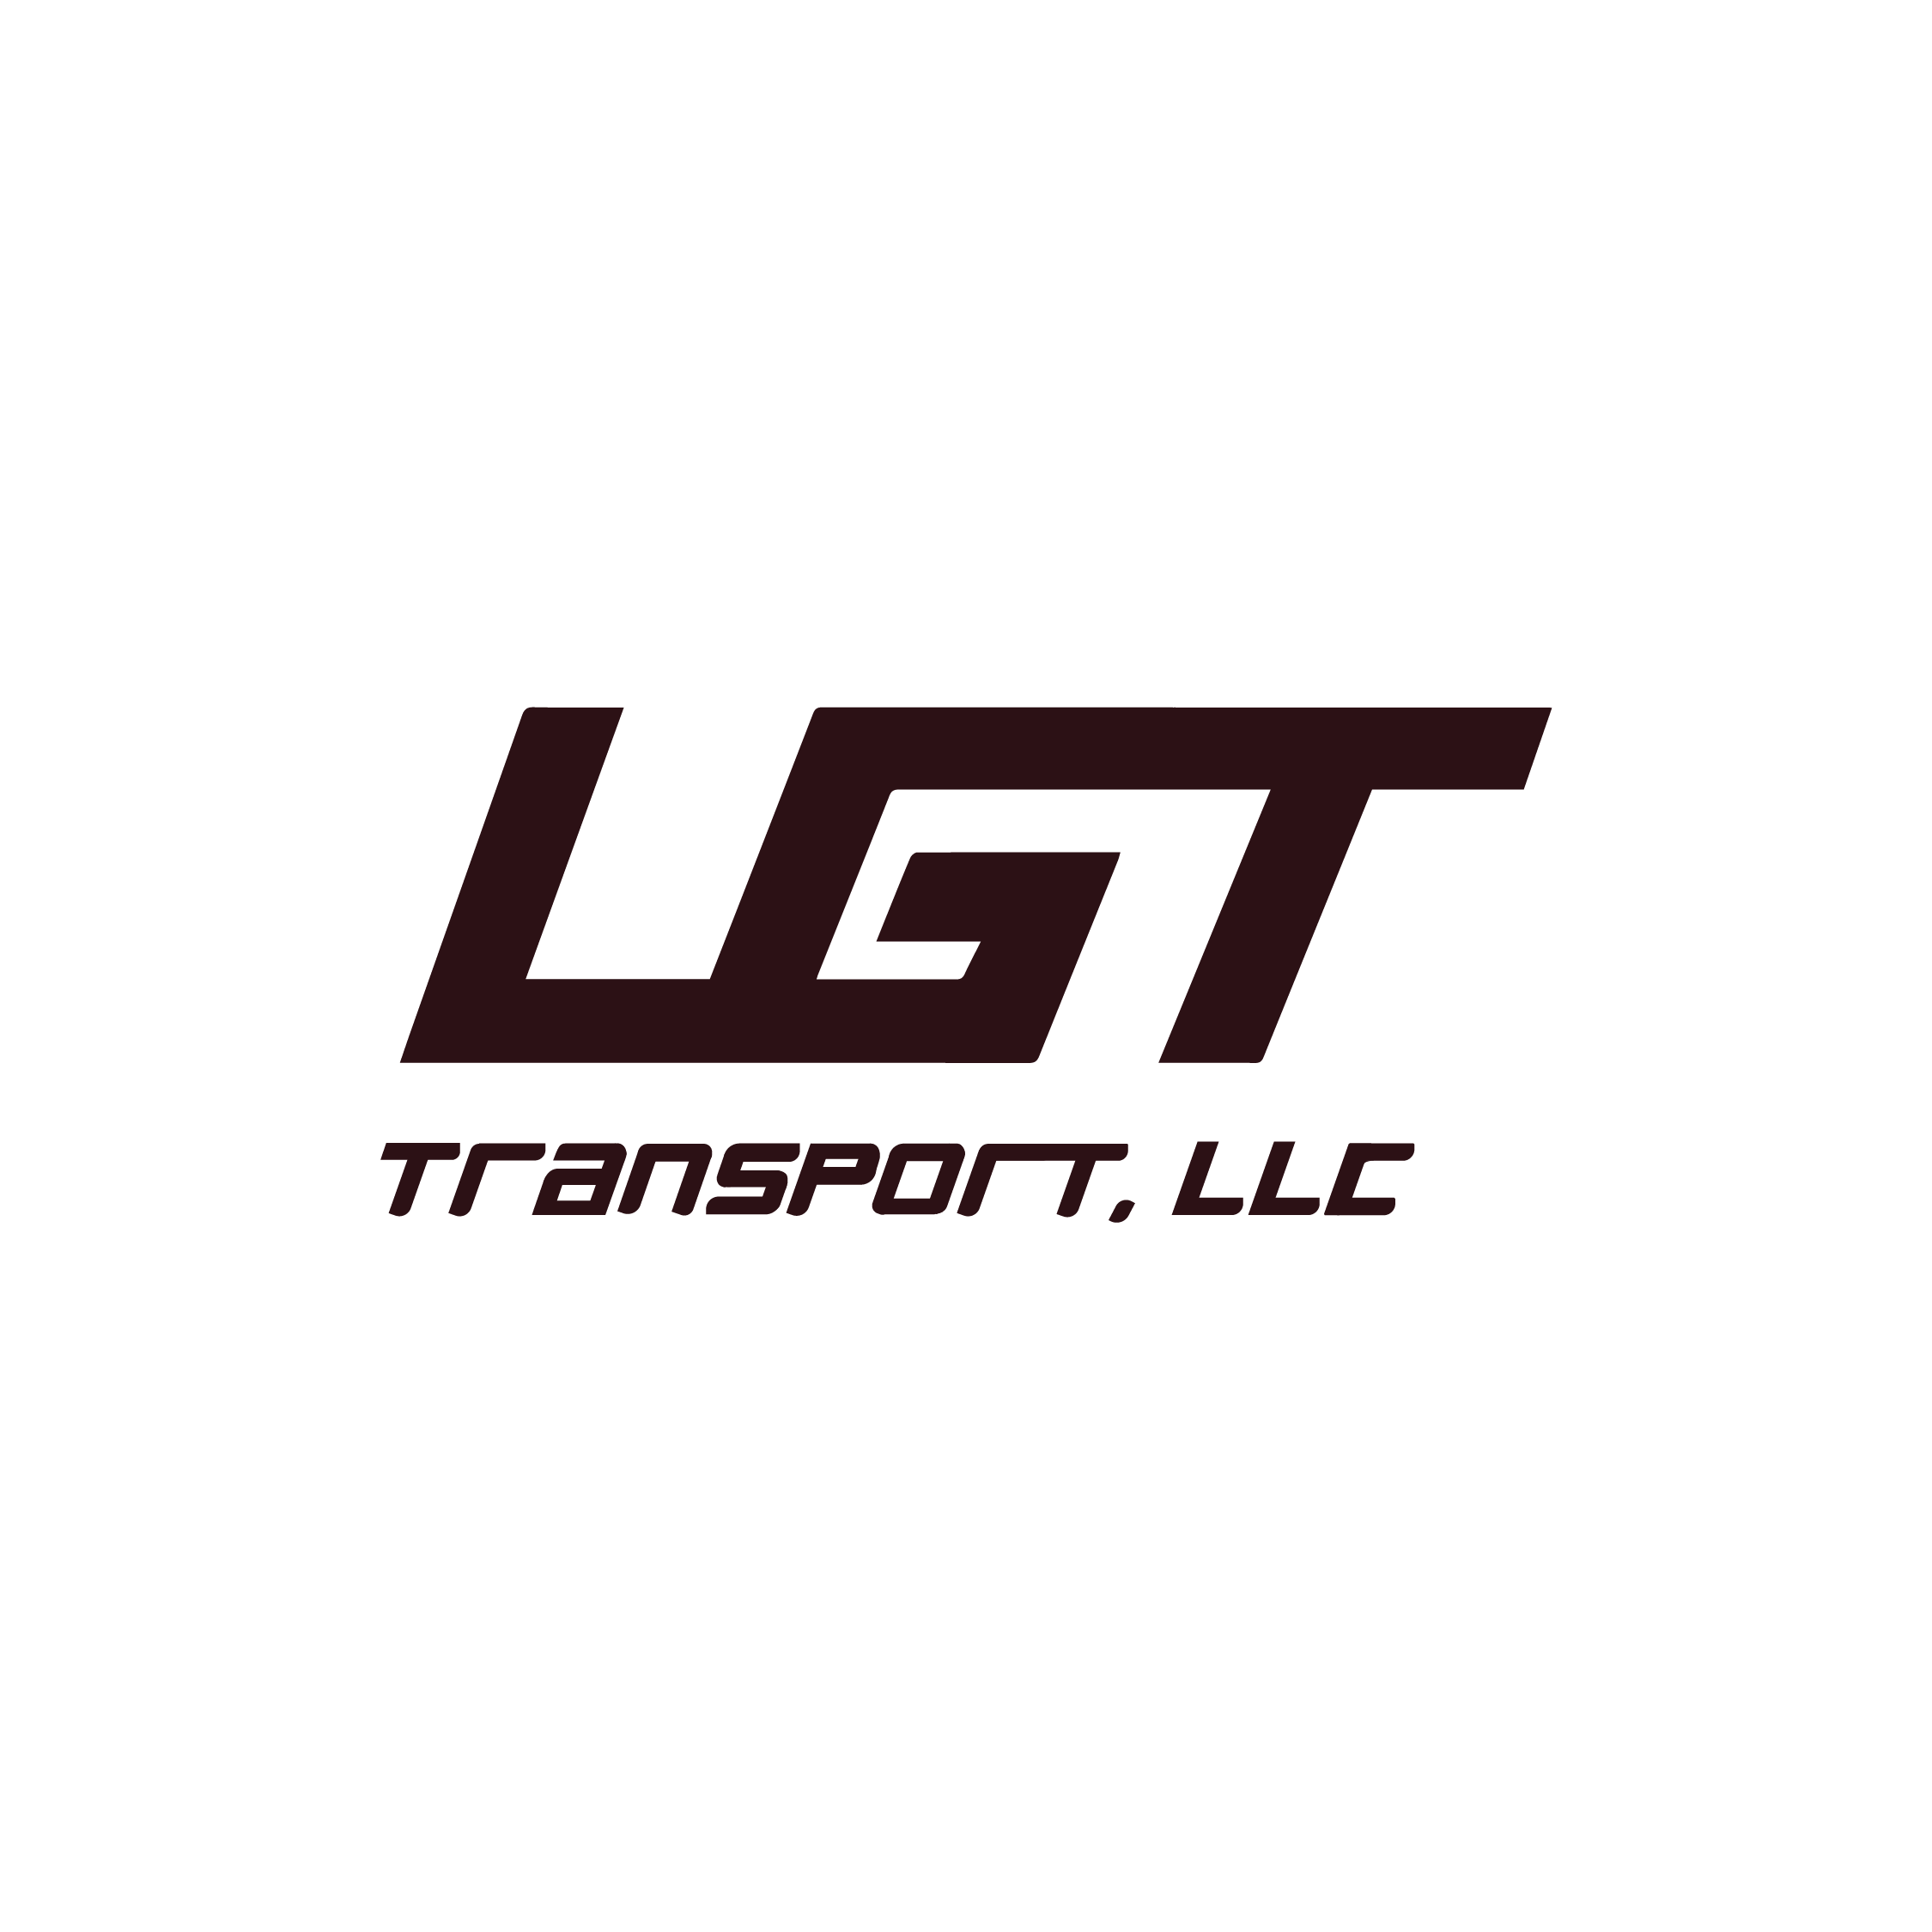 LGT Transport